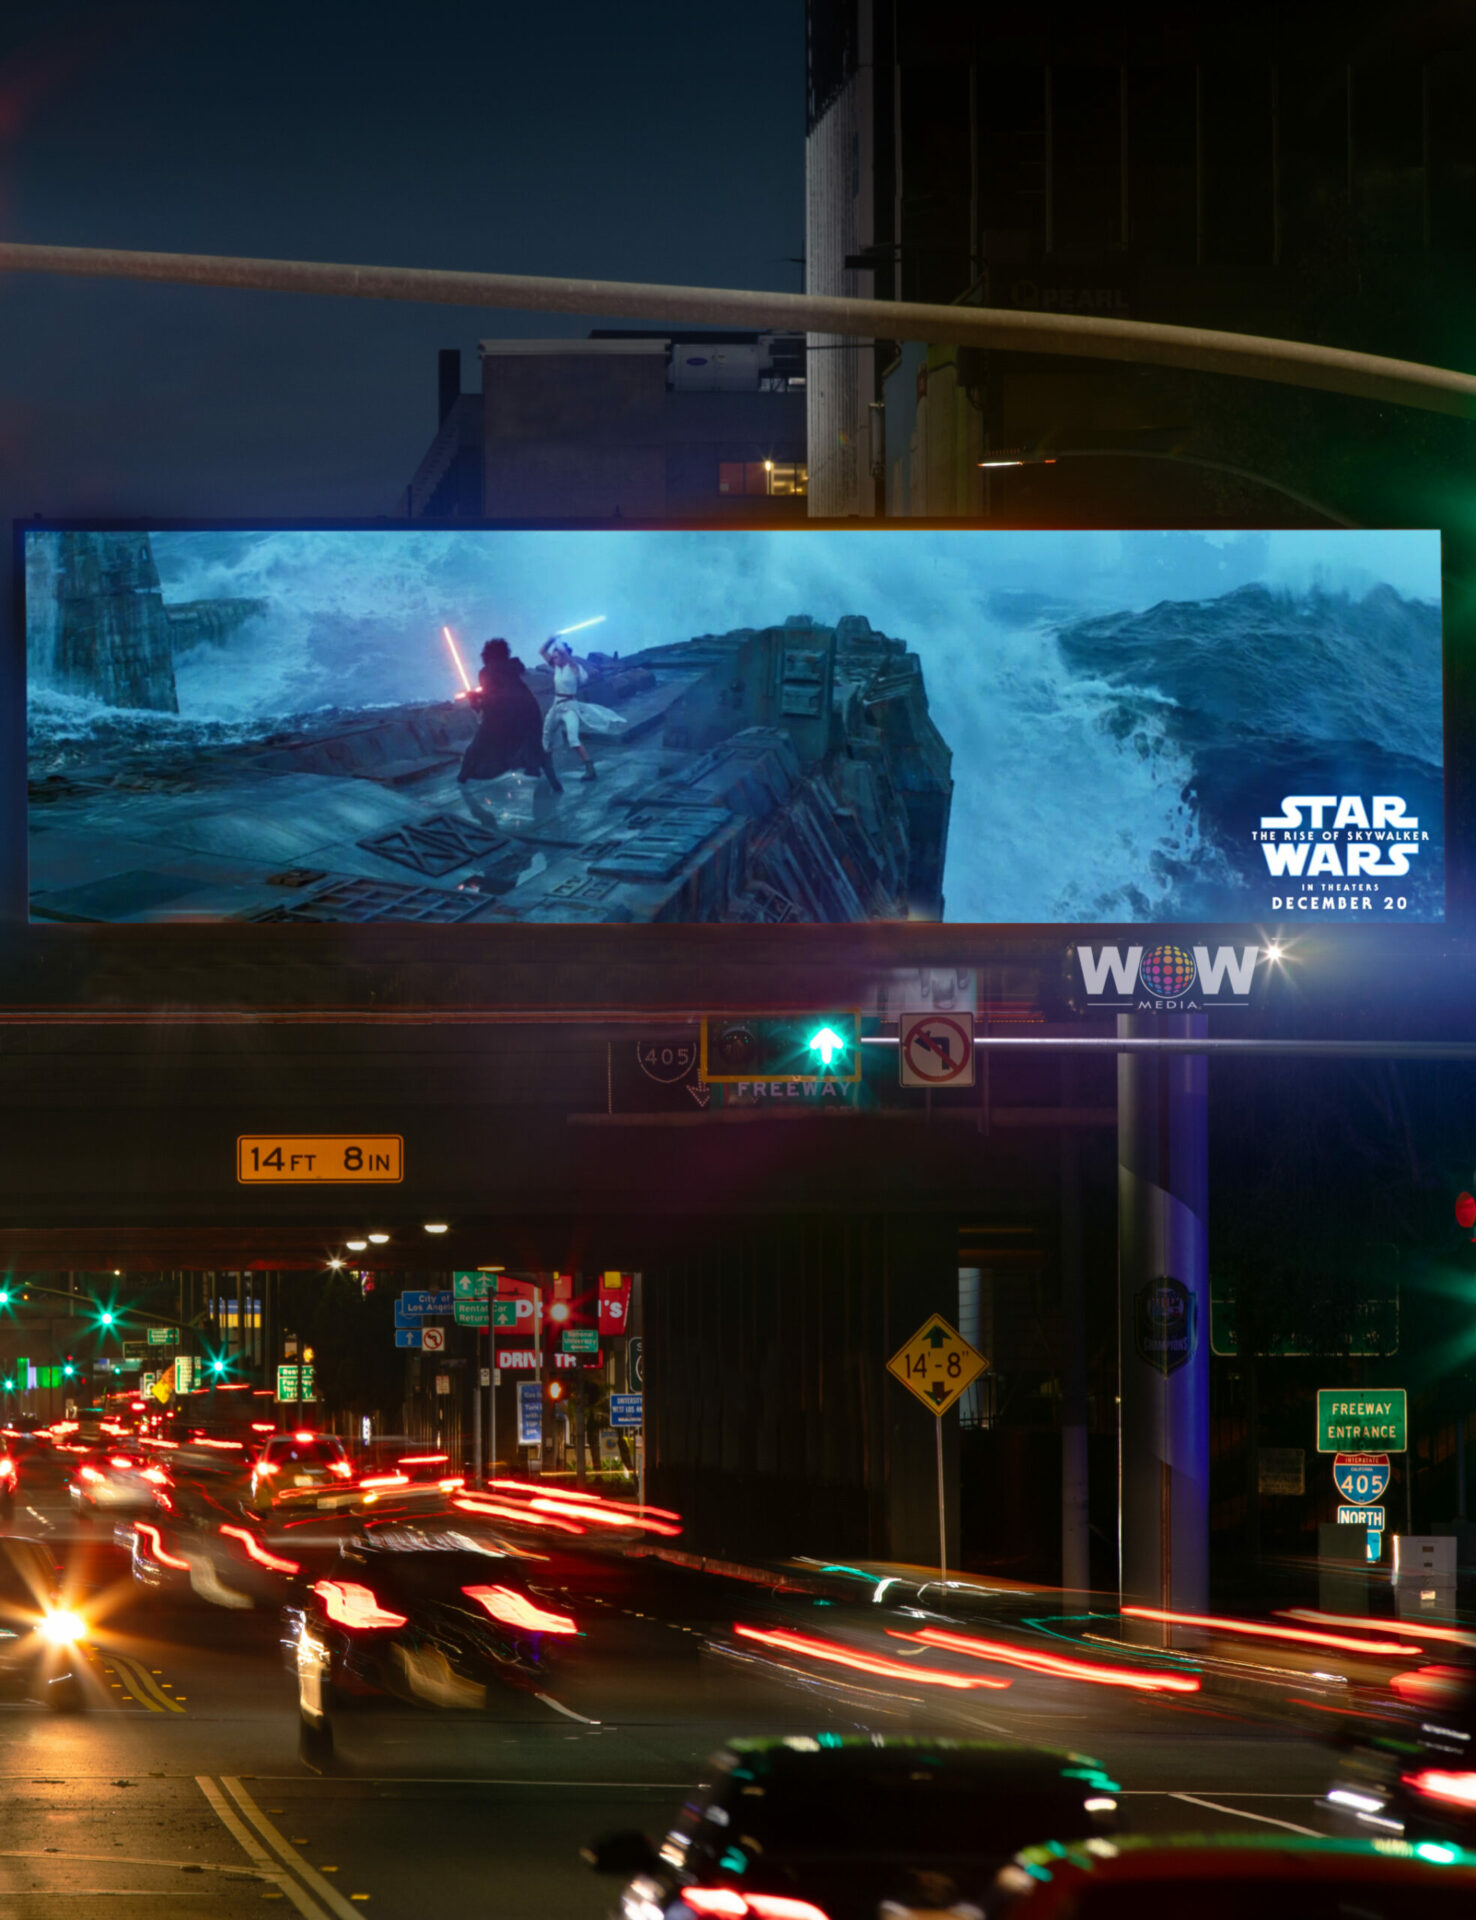 Billboard in Los Angeles promoting Star Wars